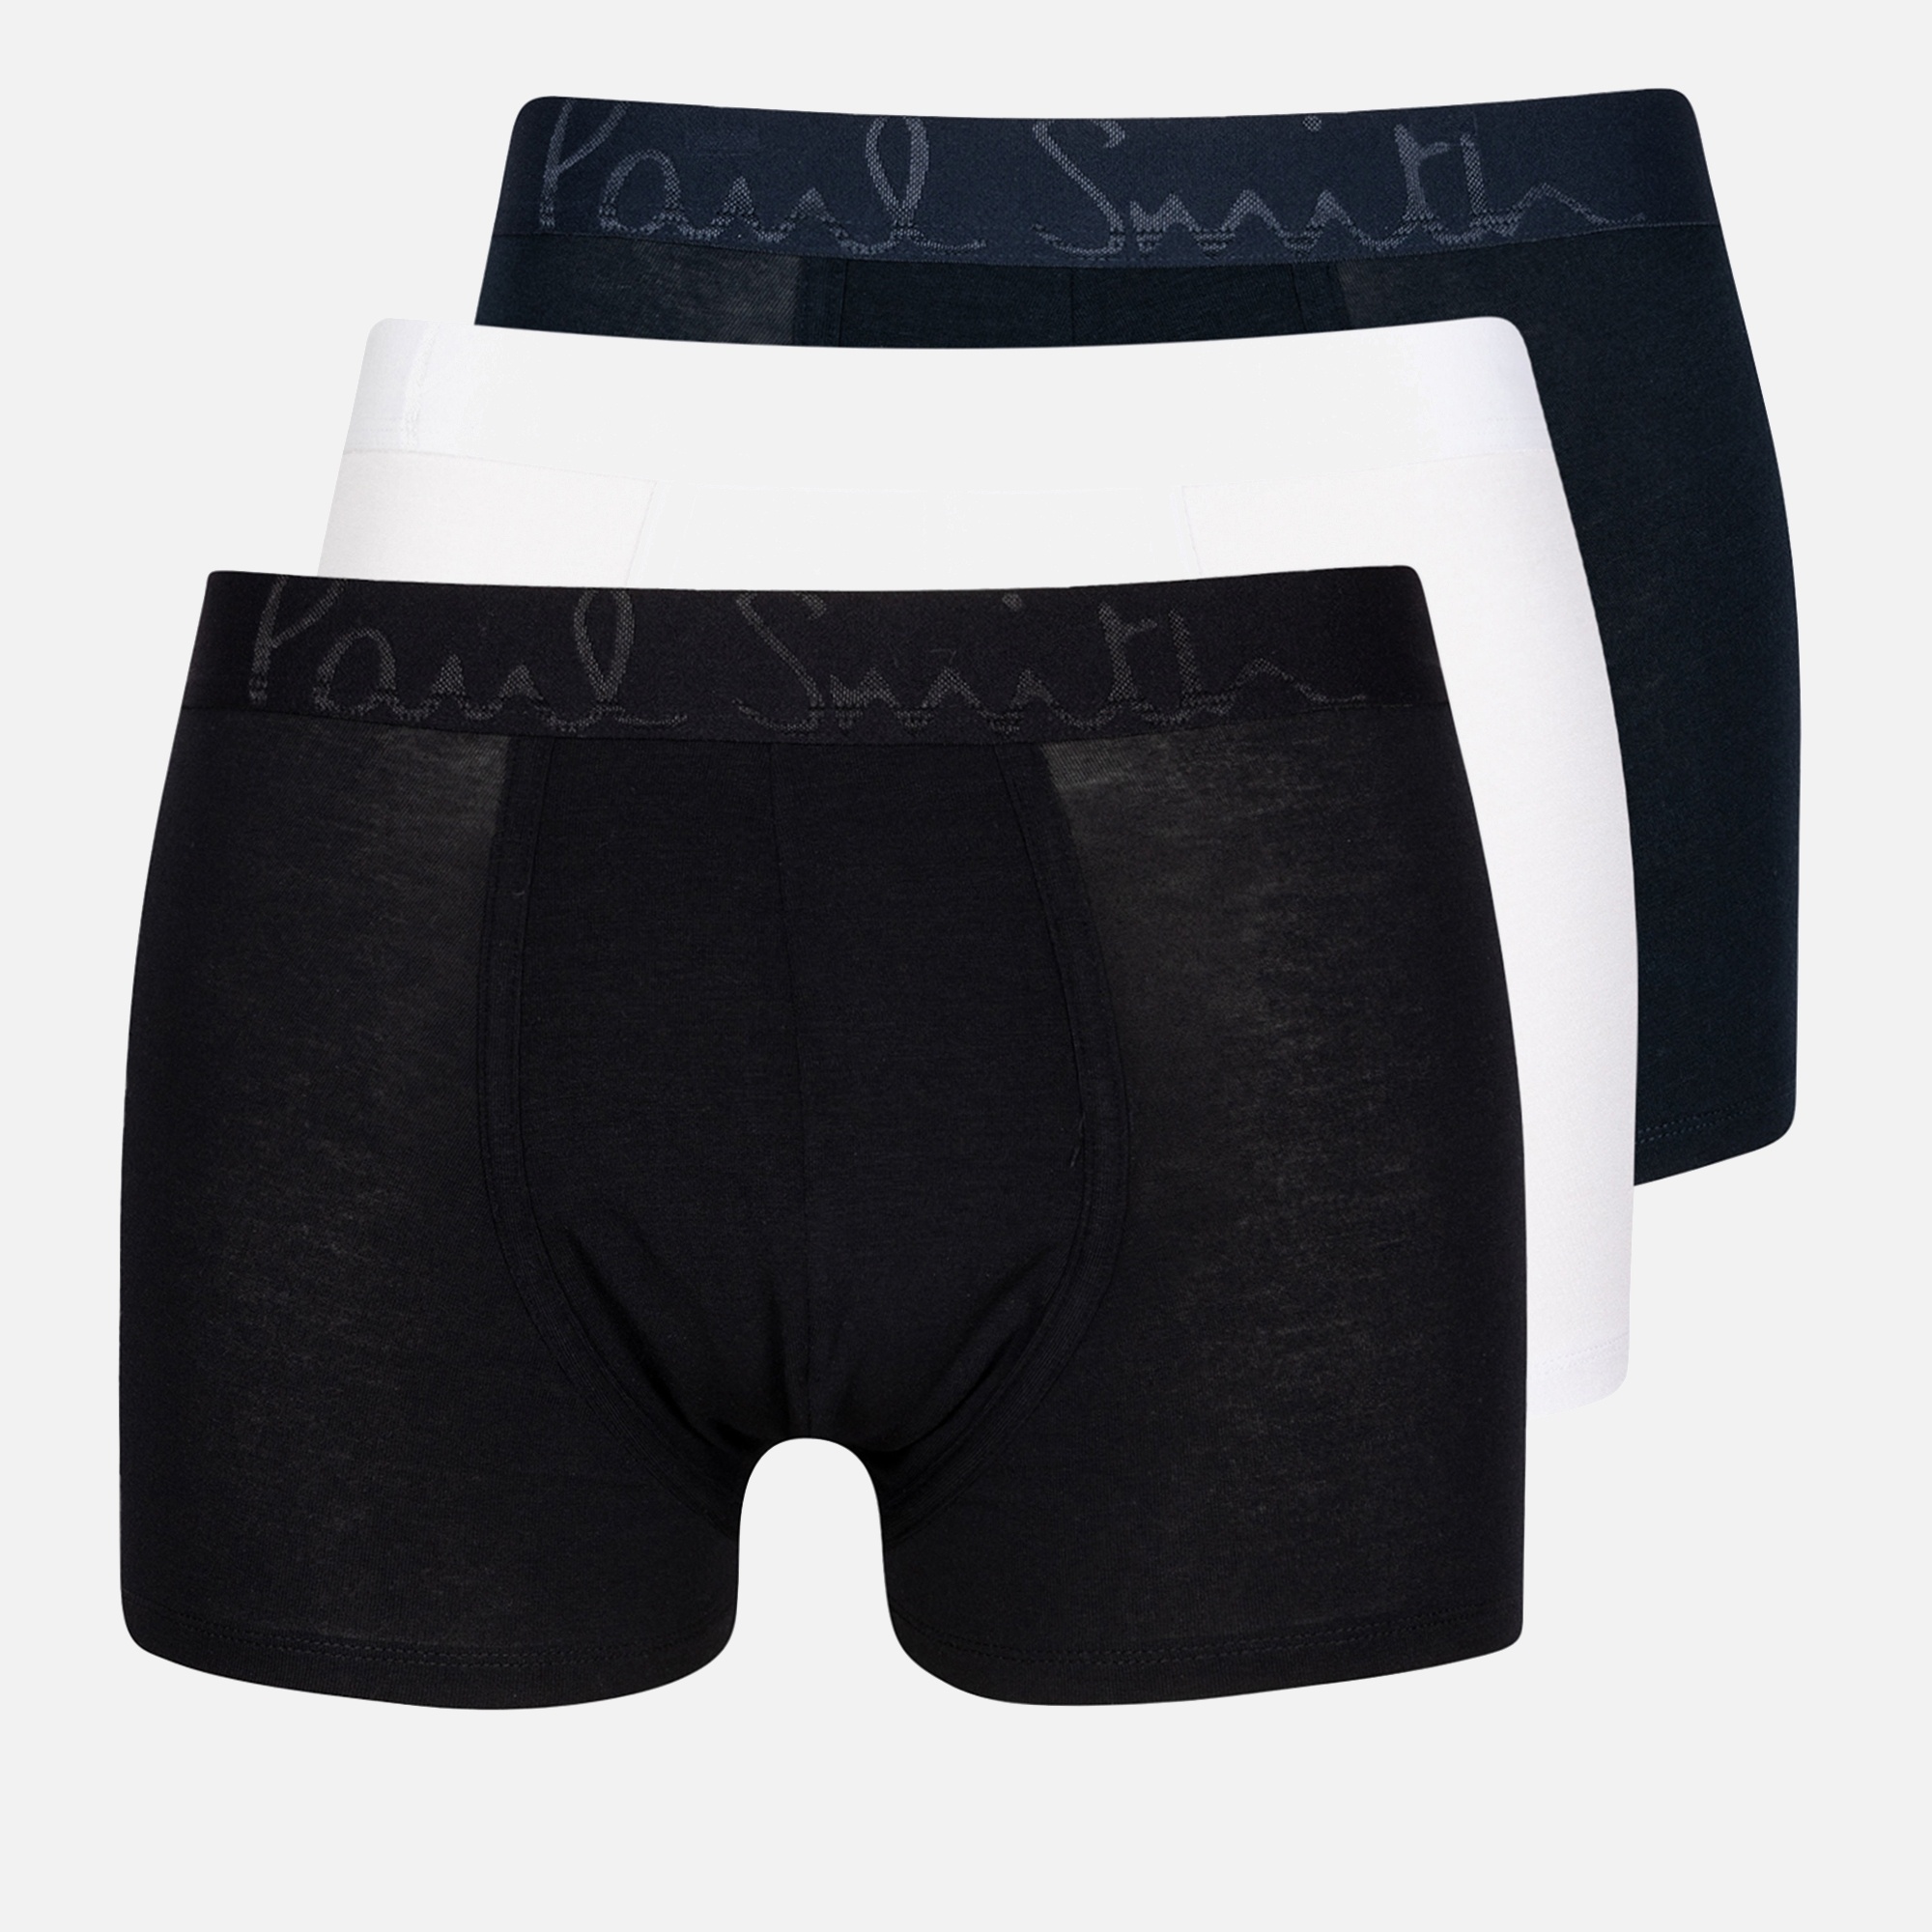 Paul Smith Men's 3 Pack Modal Boxer Shorts - Multicolour - 1